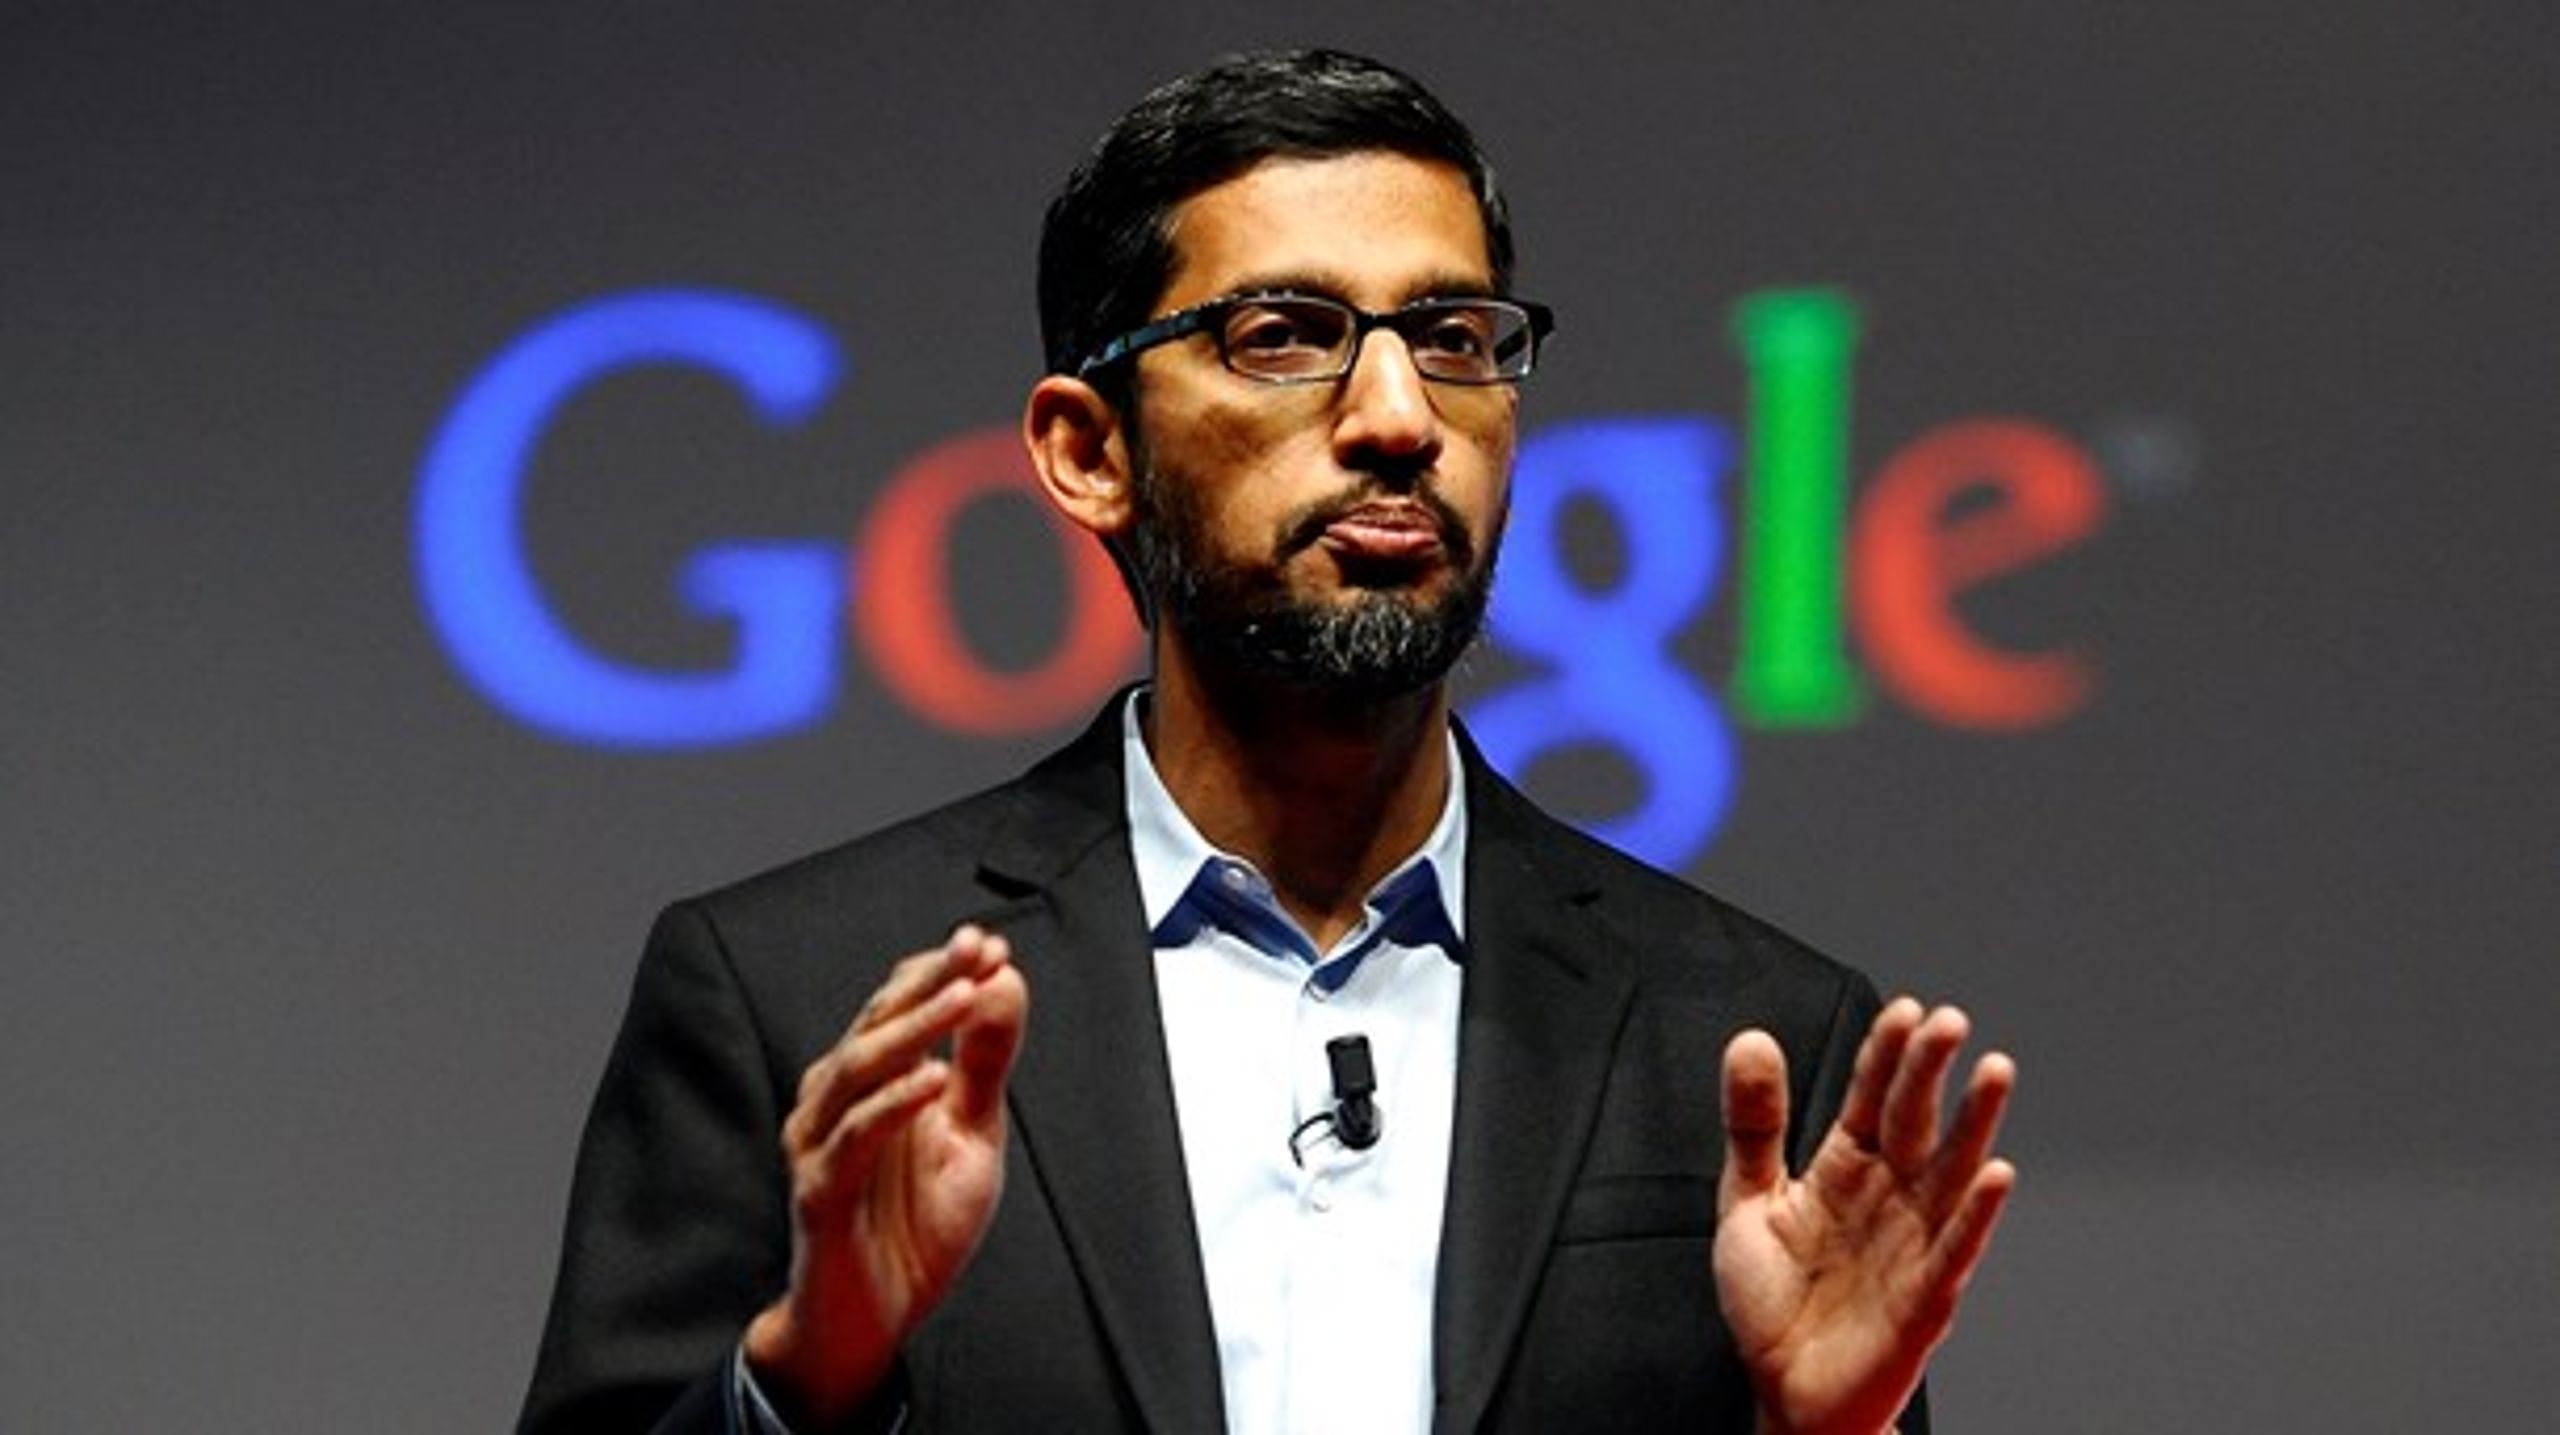 Googles CEO,&nbsp;Sundar Pichai, har sat handling bag sine ord og undskyldninger.